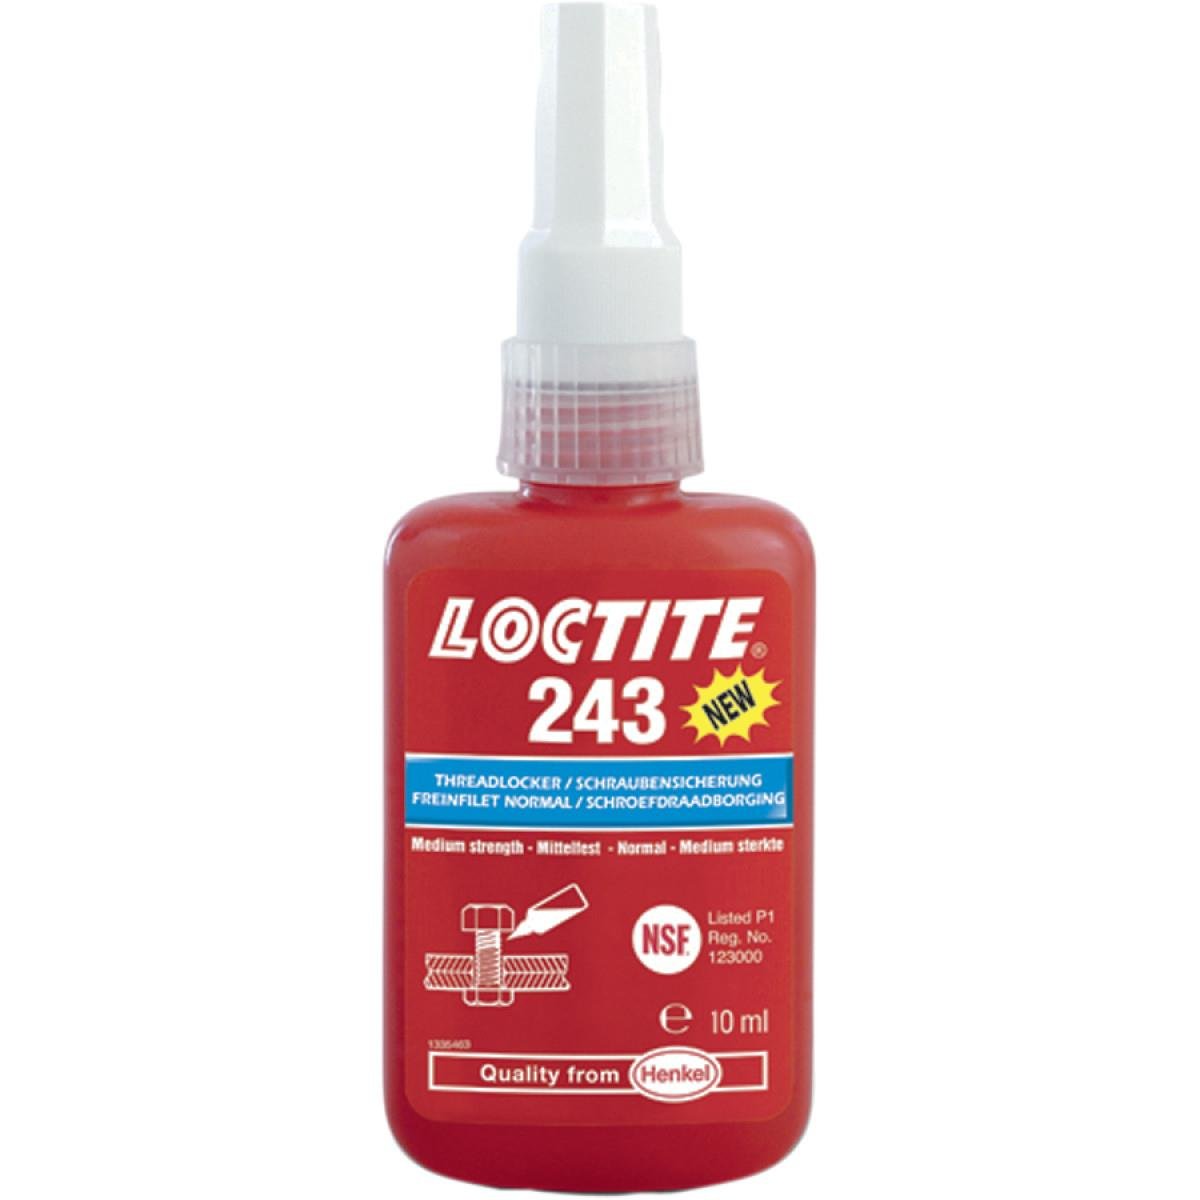 Loctite Threadlocking 243 Medium strength, 10 ml